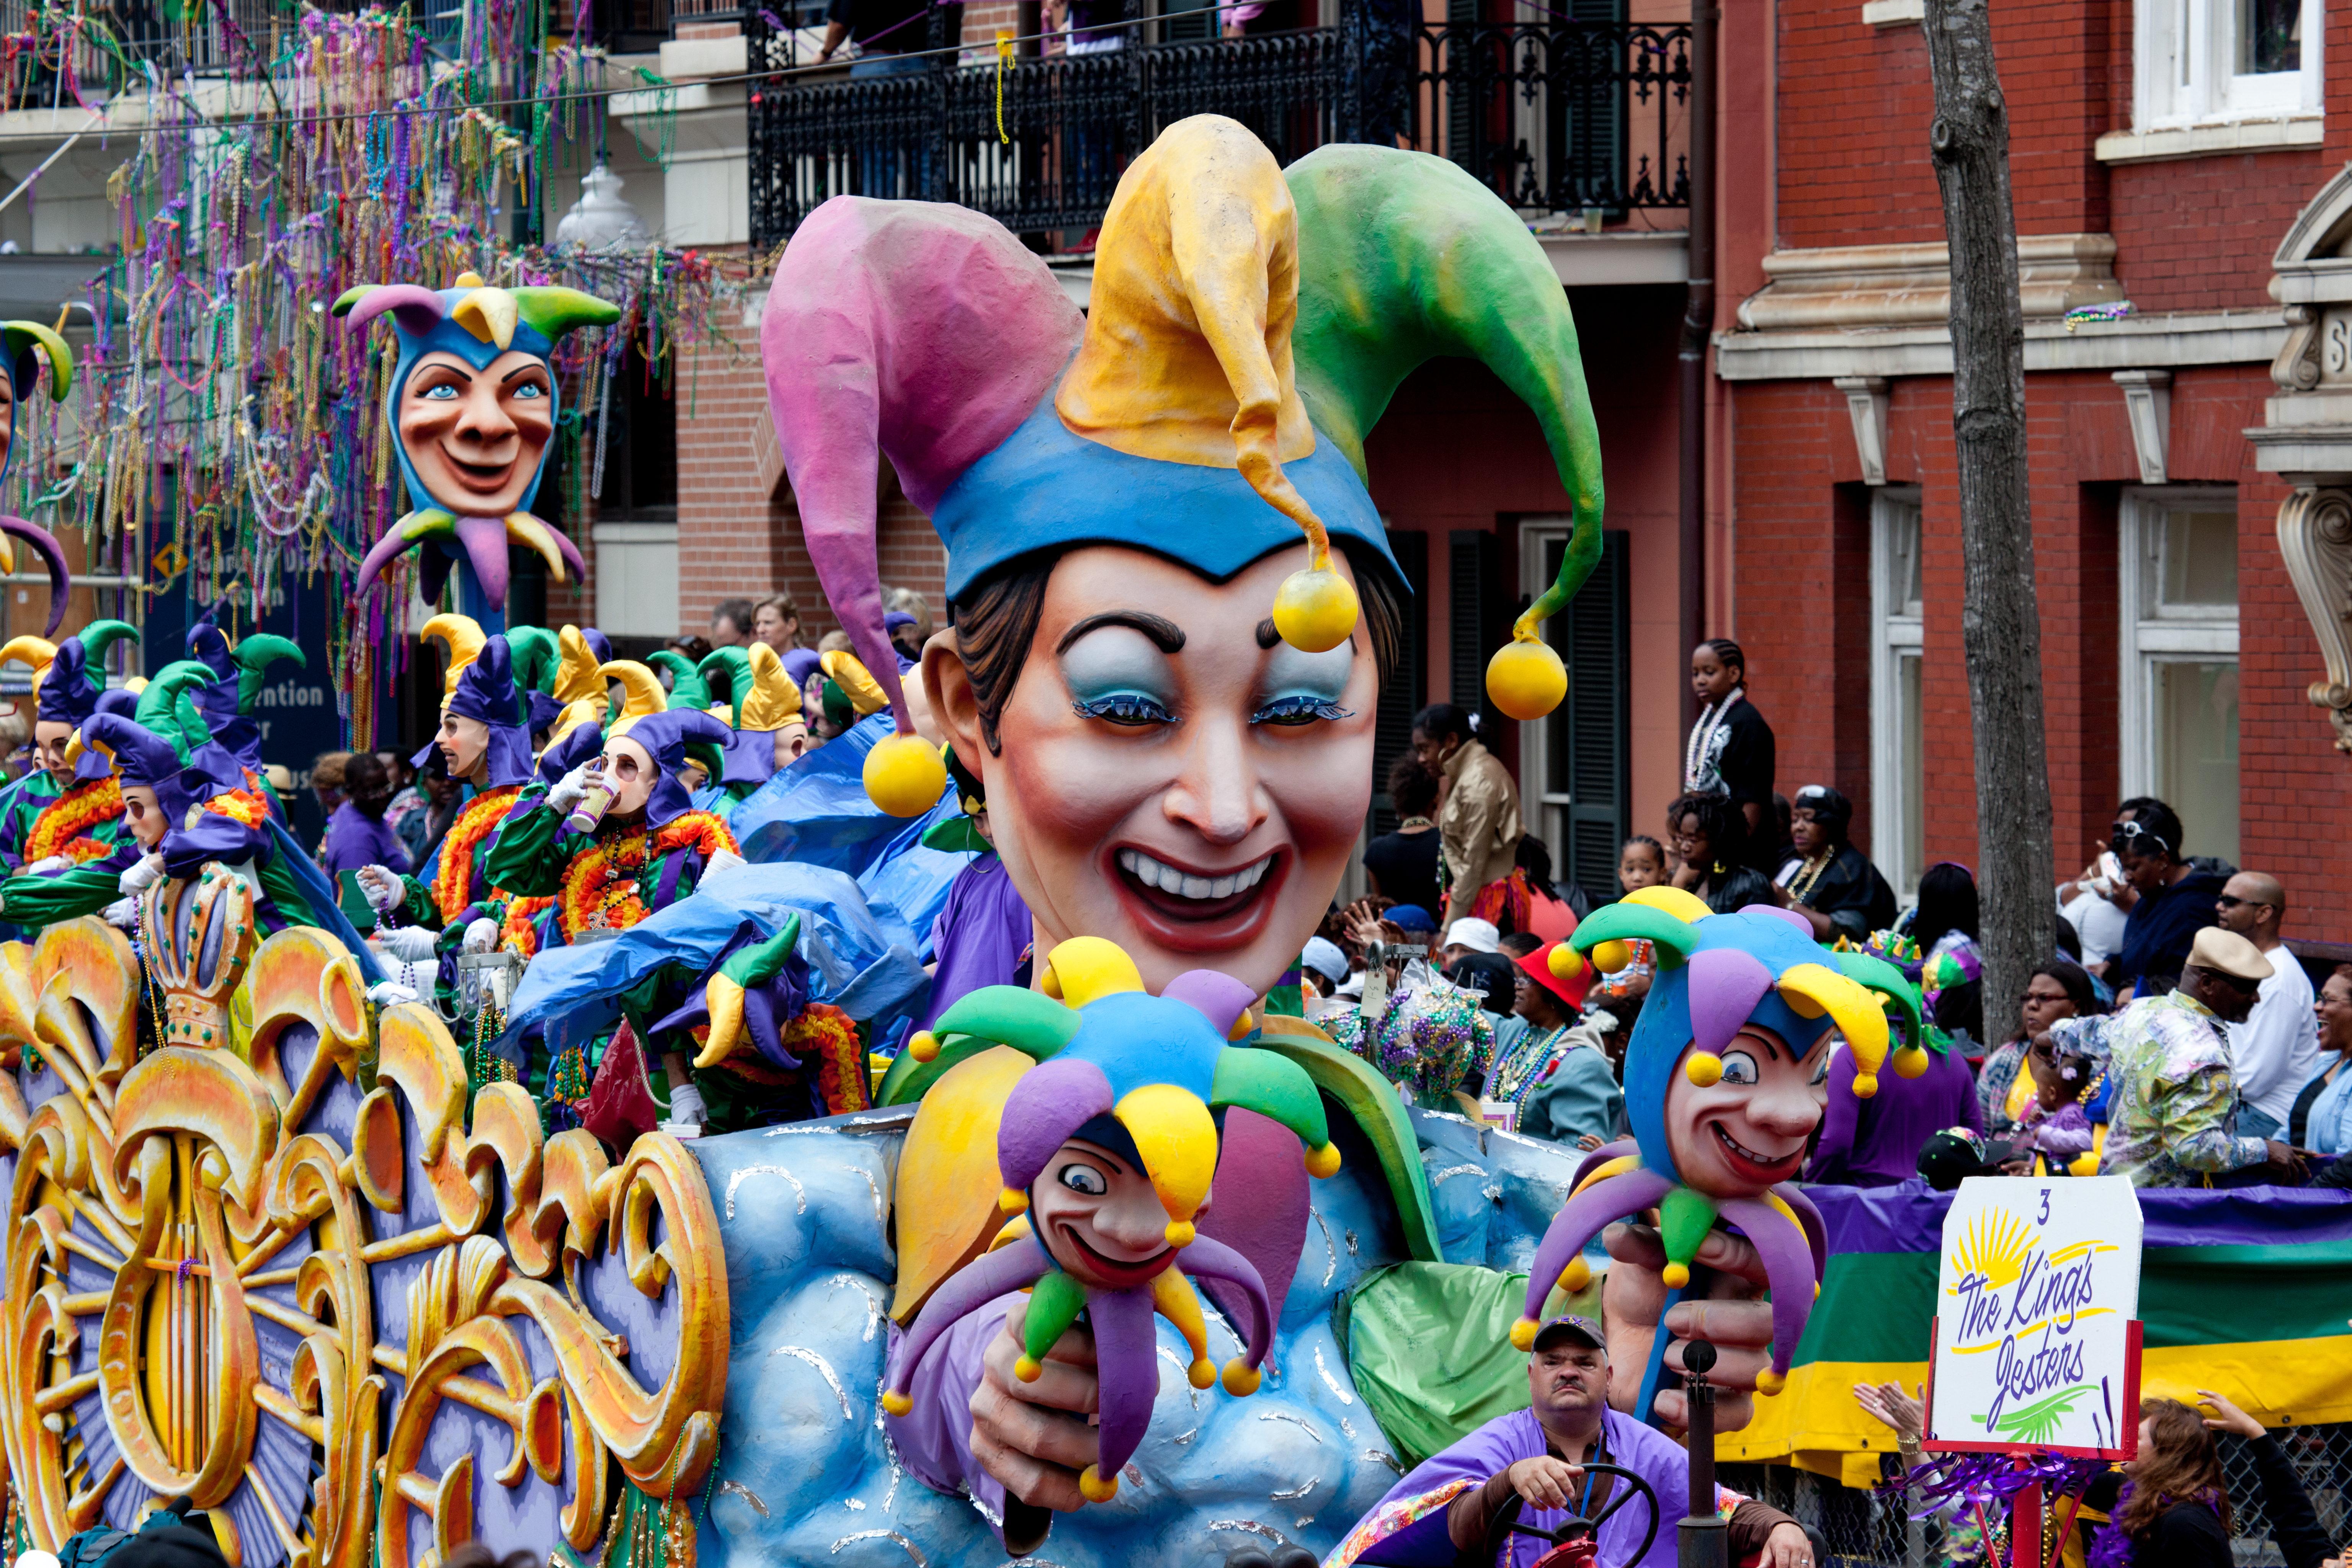 Mardi gras celebration in New Orleans